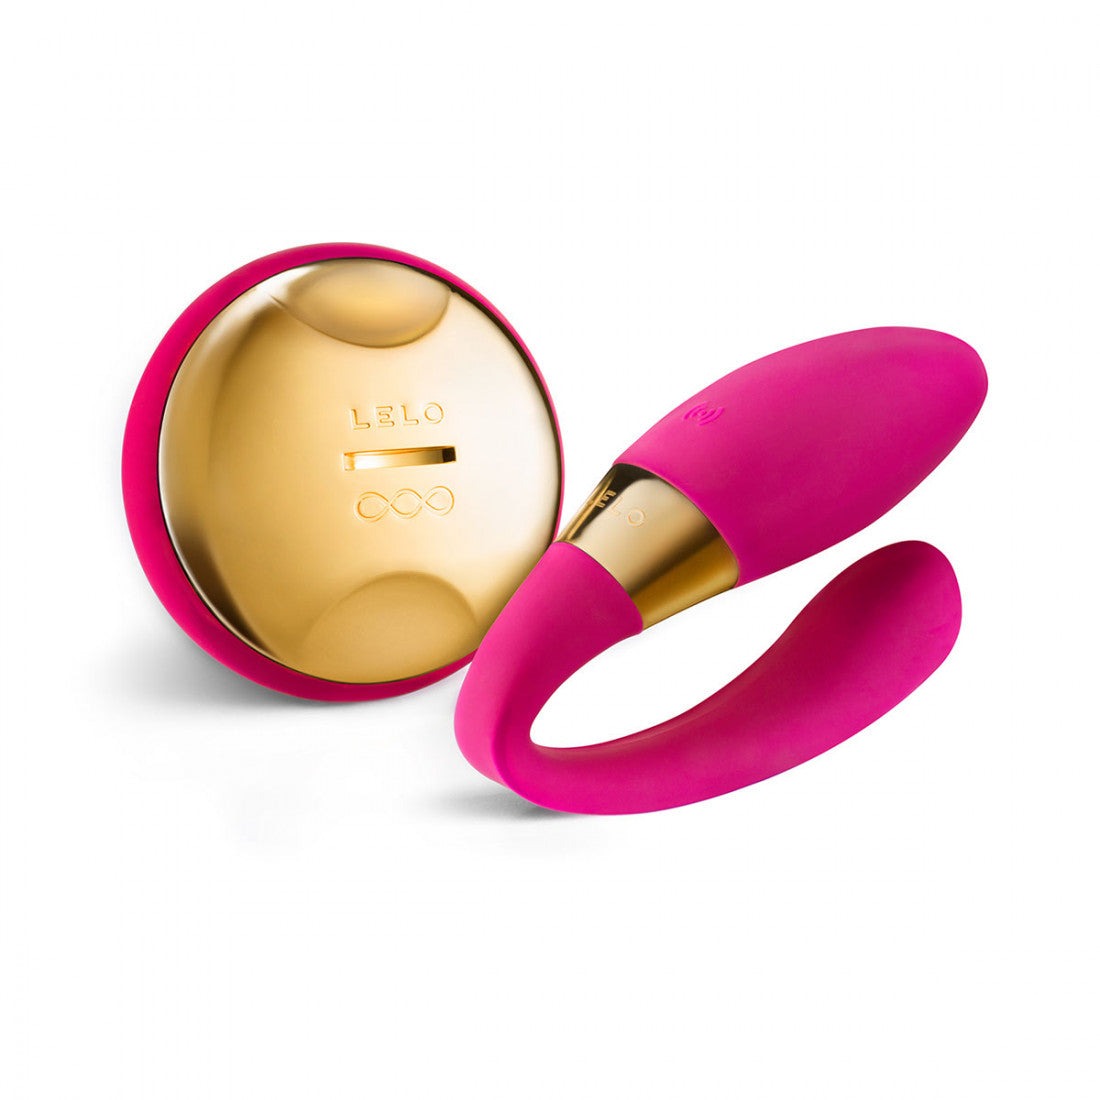 LELO Tiani 24K Gold Couples Vibrator - Pleasure & Intimacy